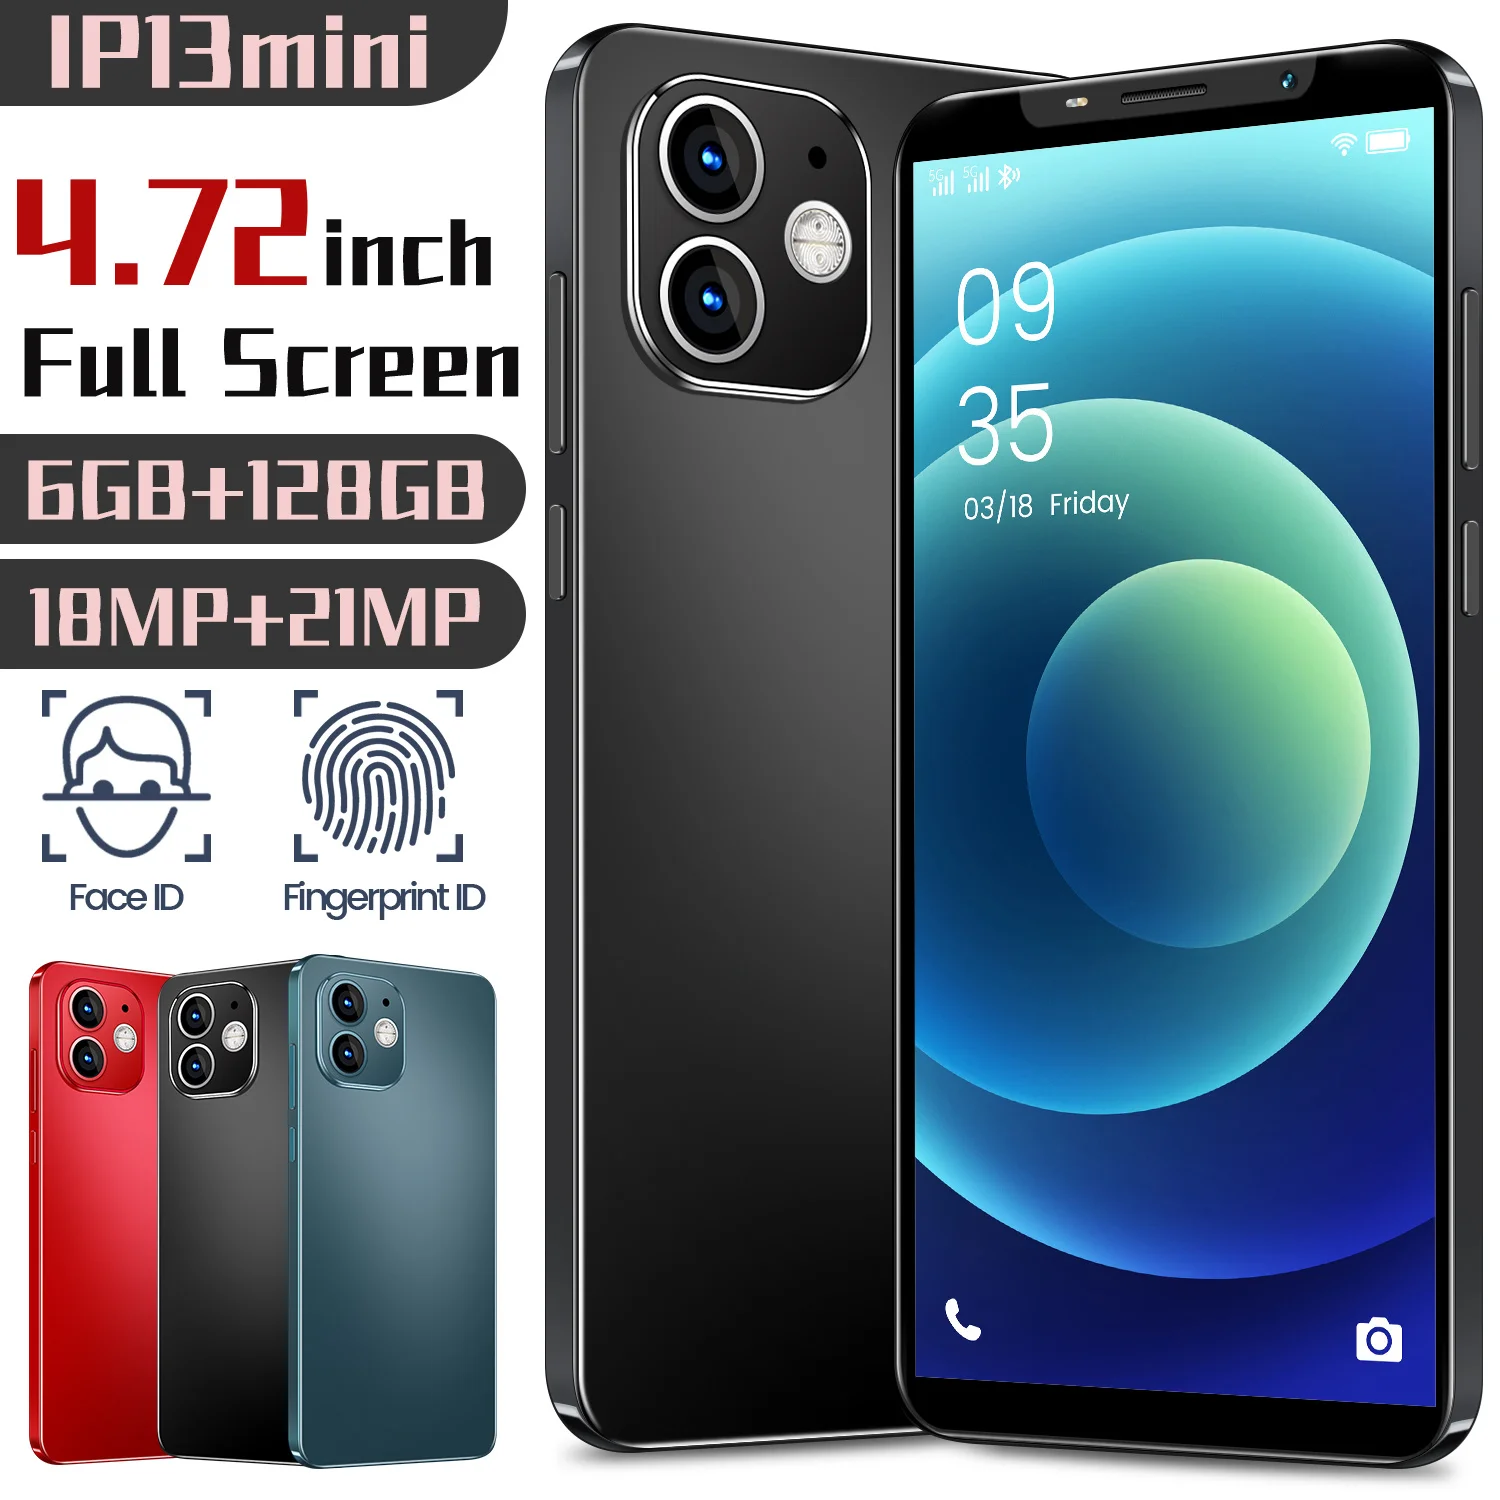 global version ip13mini 4 72 inch 4300mah battery face wake fingerprint unlock phone 6gb128gb mobile phone audio android phone free global shipping